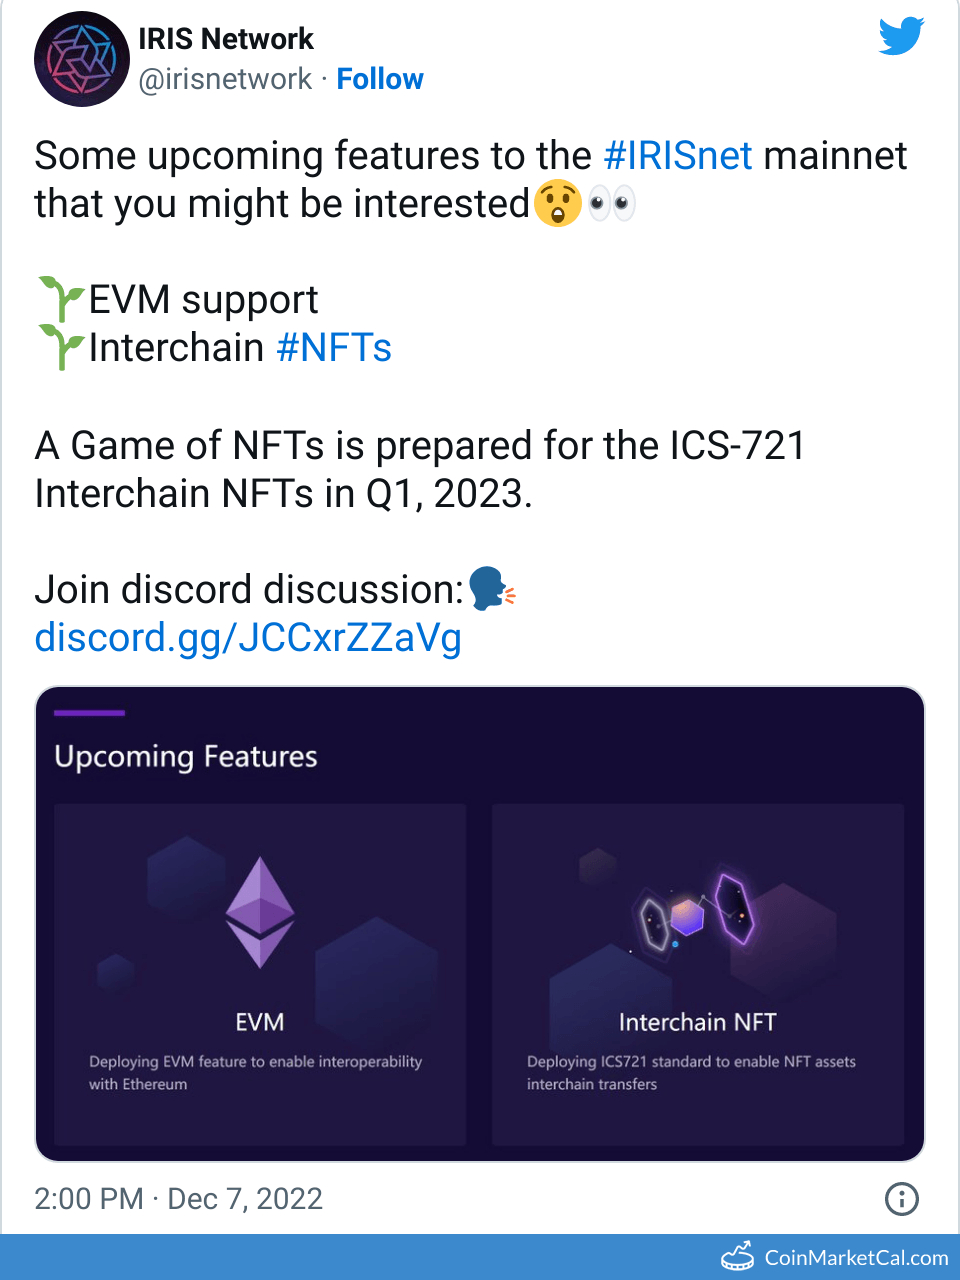 Interchain NFT image